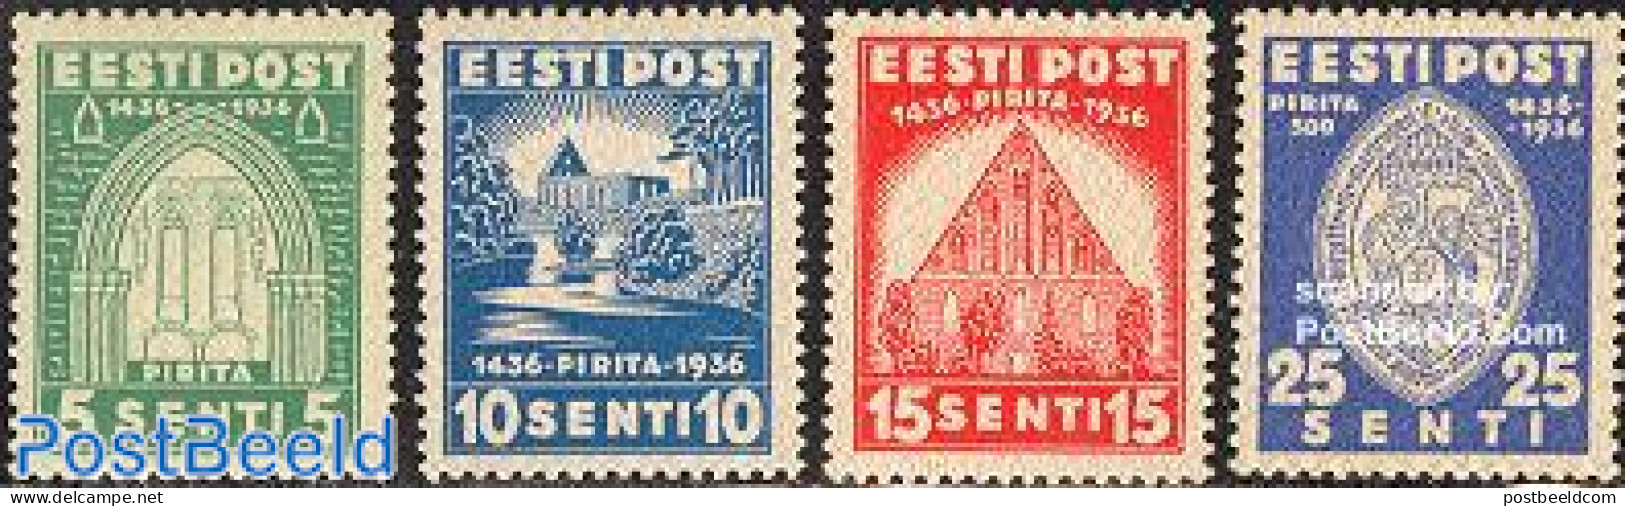 Estonia 1936 Pirita Cloister 4v, Unused (hinged), Religion - Cloisters & Abbeys - Abbeys & Monasteries